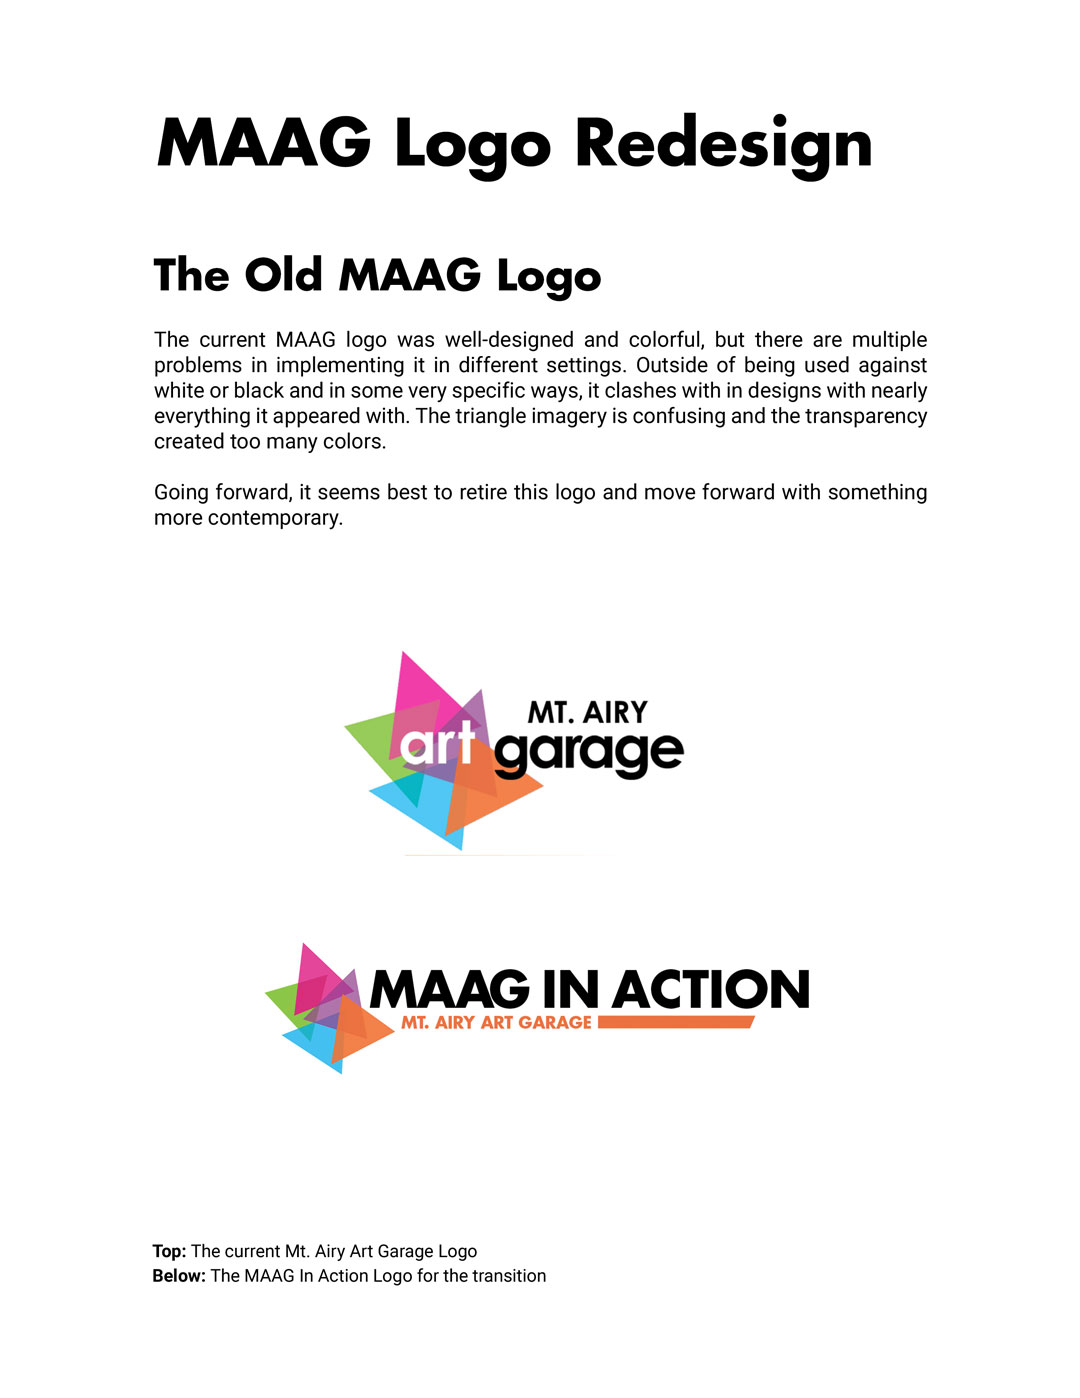 MAAG Logo Redesign 2020 Branding Guide Page 1 - Old Logos